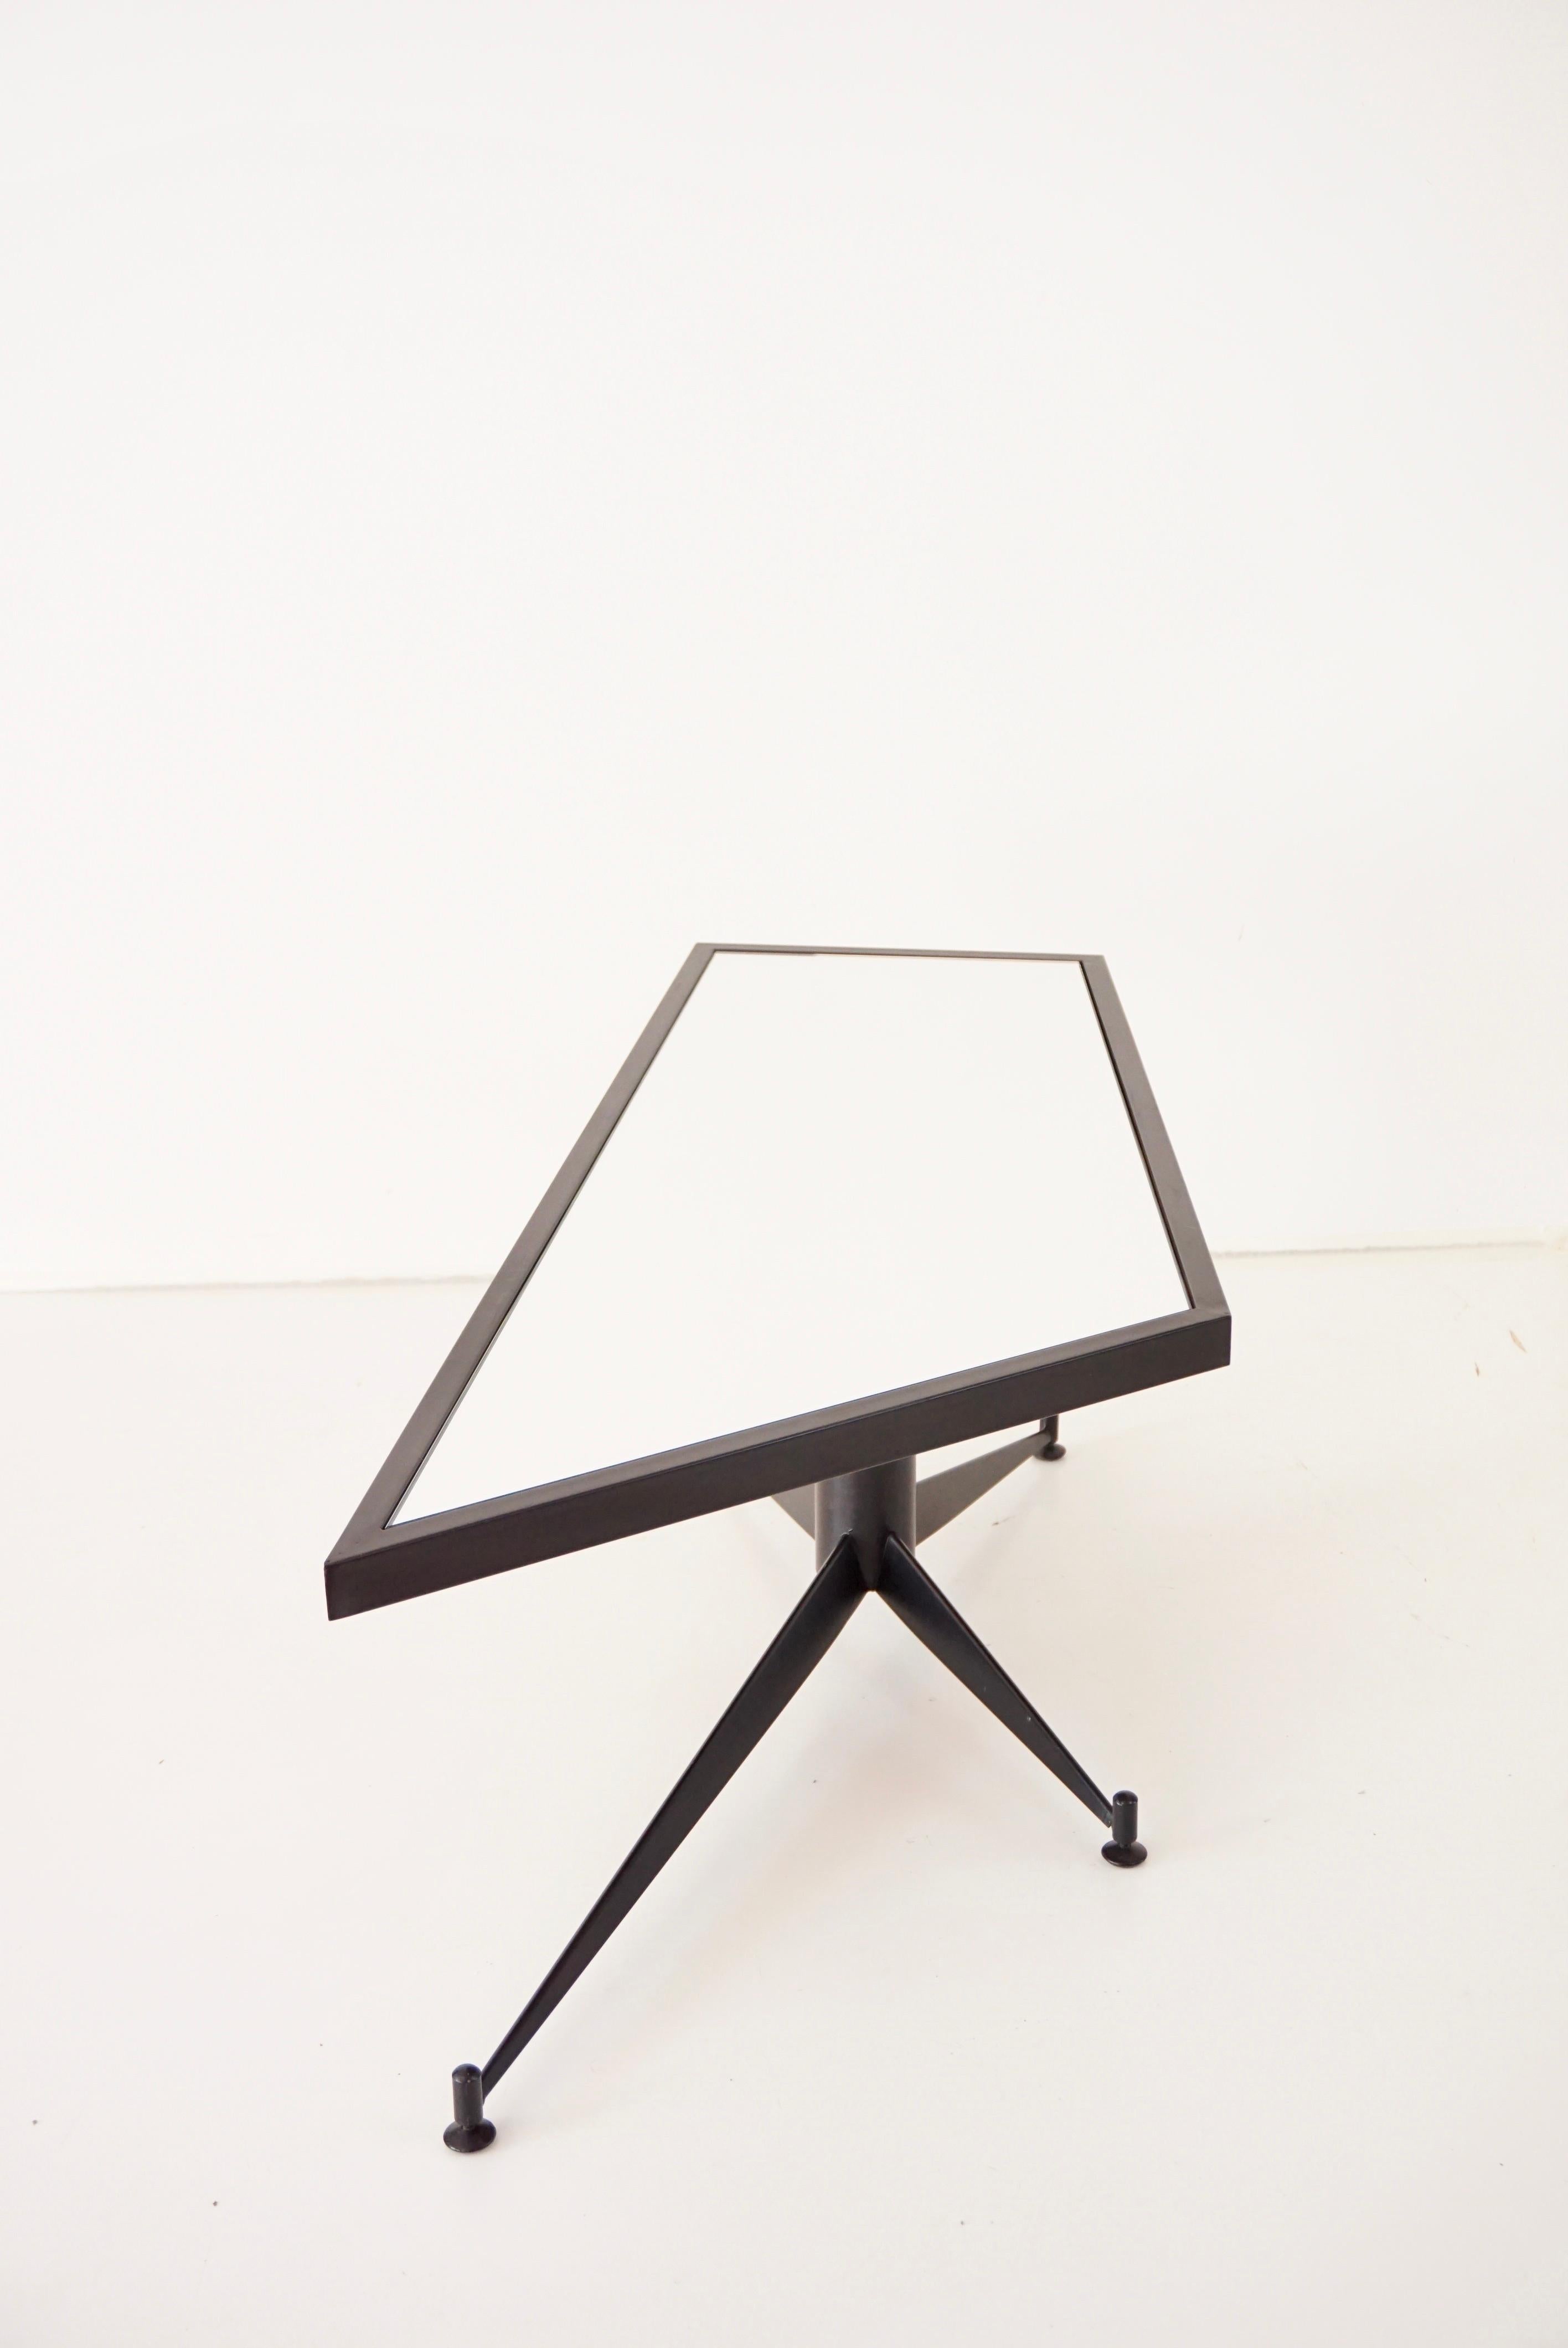 Brass Gio Ponti Irregular, Asymmetrical Black Mirrored Low Coffee Table, RIMA 1955